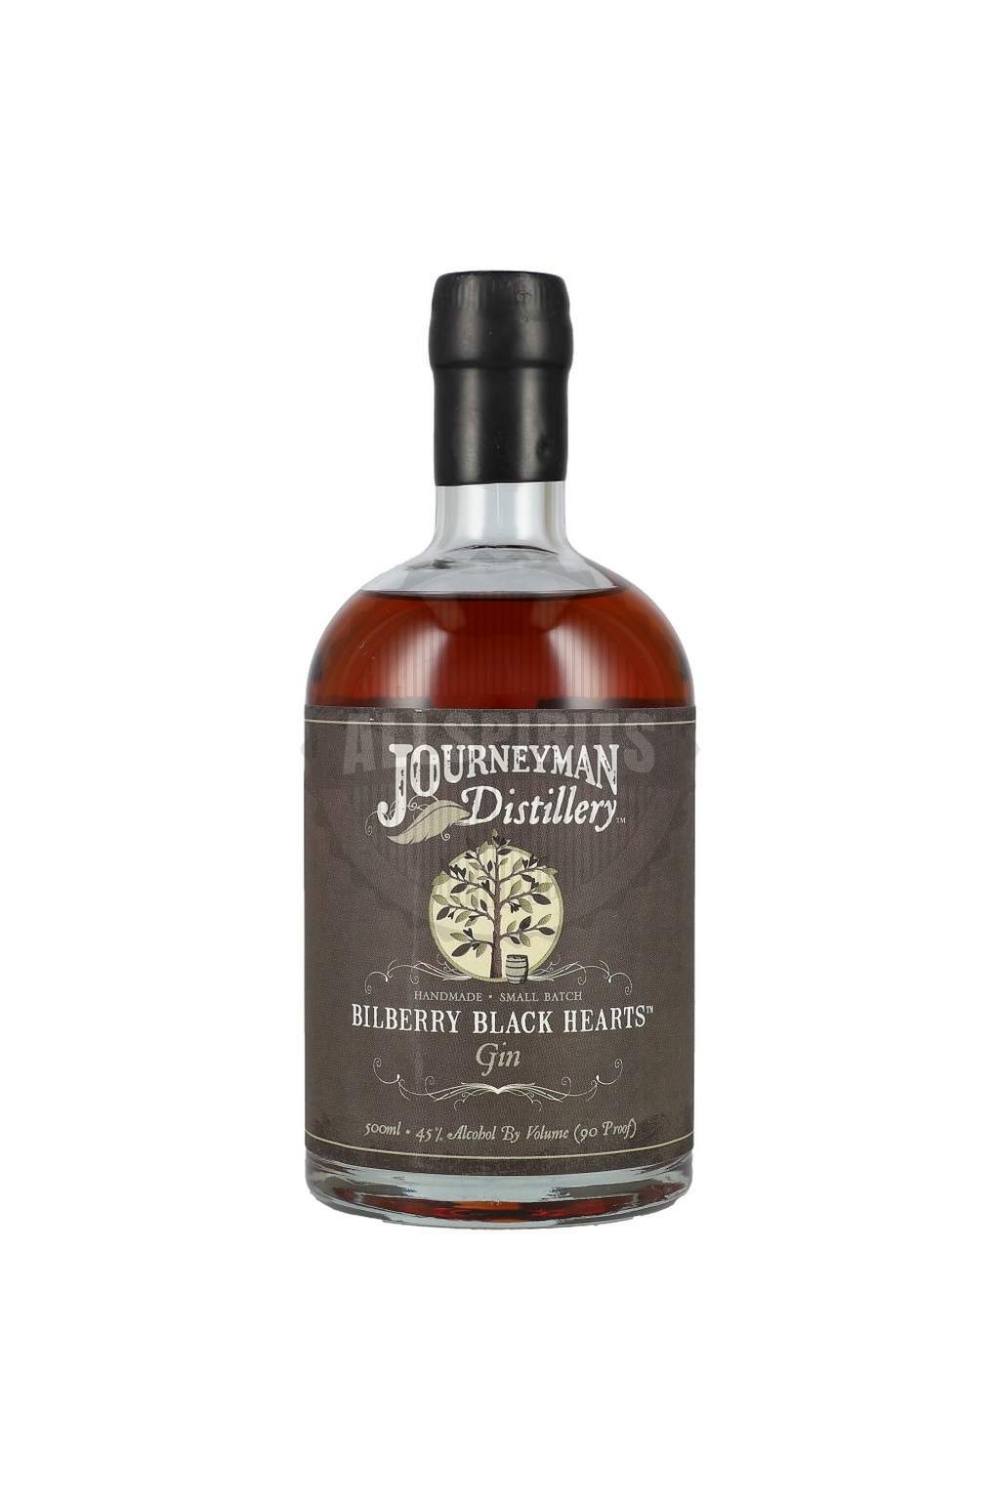 Journeyman Bilberry Black Hgearts Gin 45% vol. Gin